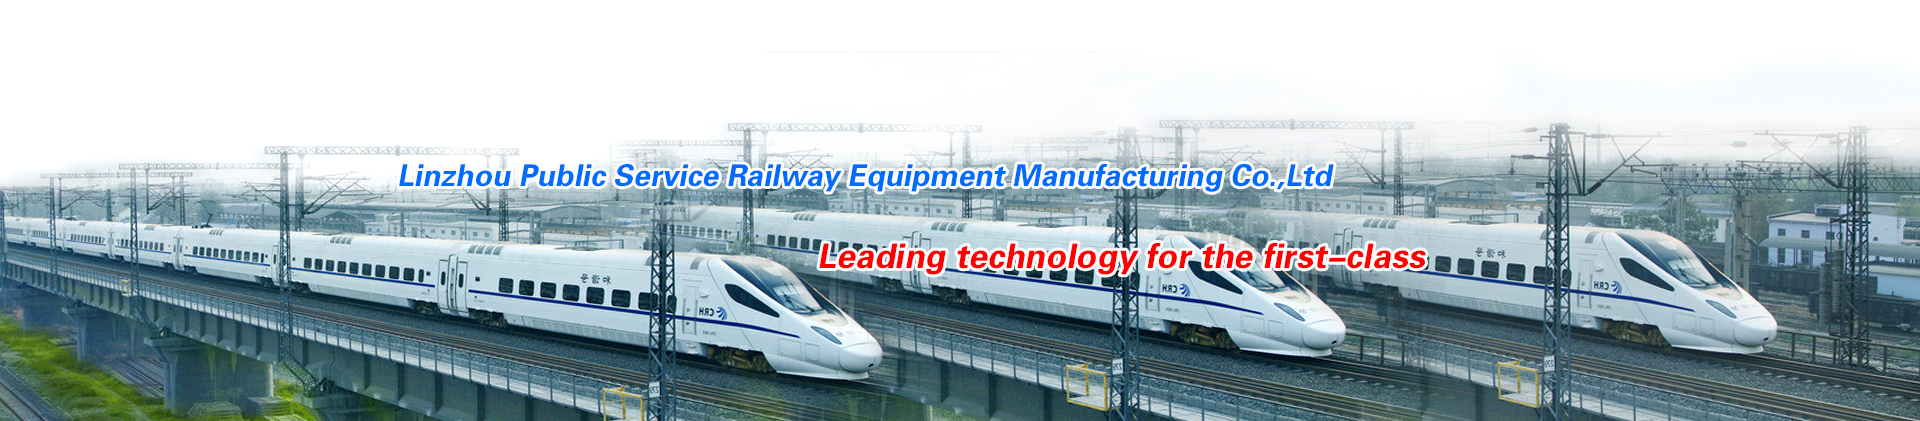 Linzhou Public Service Railway Equipment Manufacturing Co.,Ltd